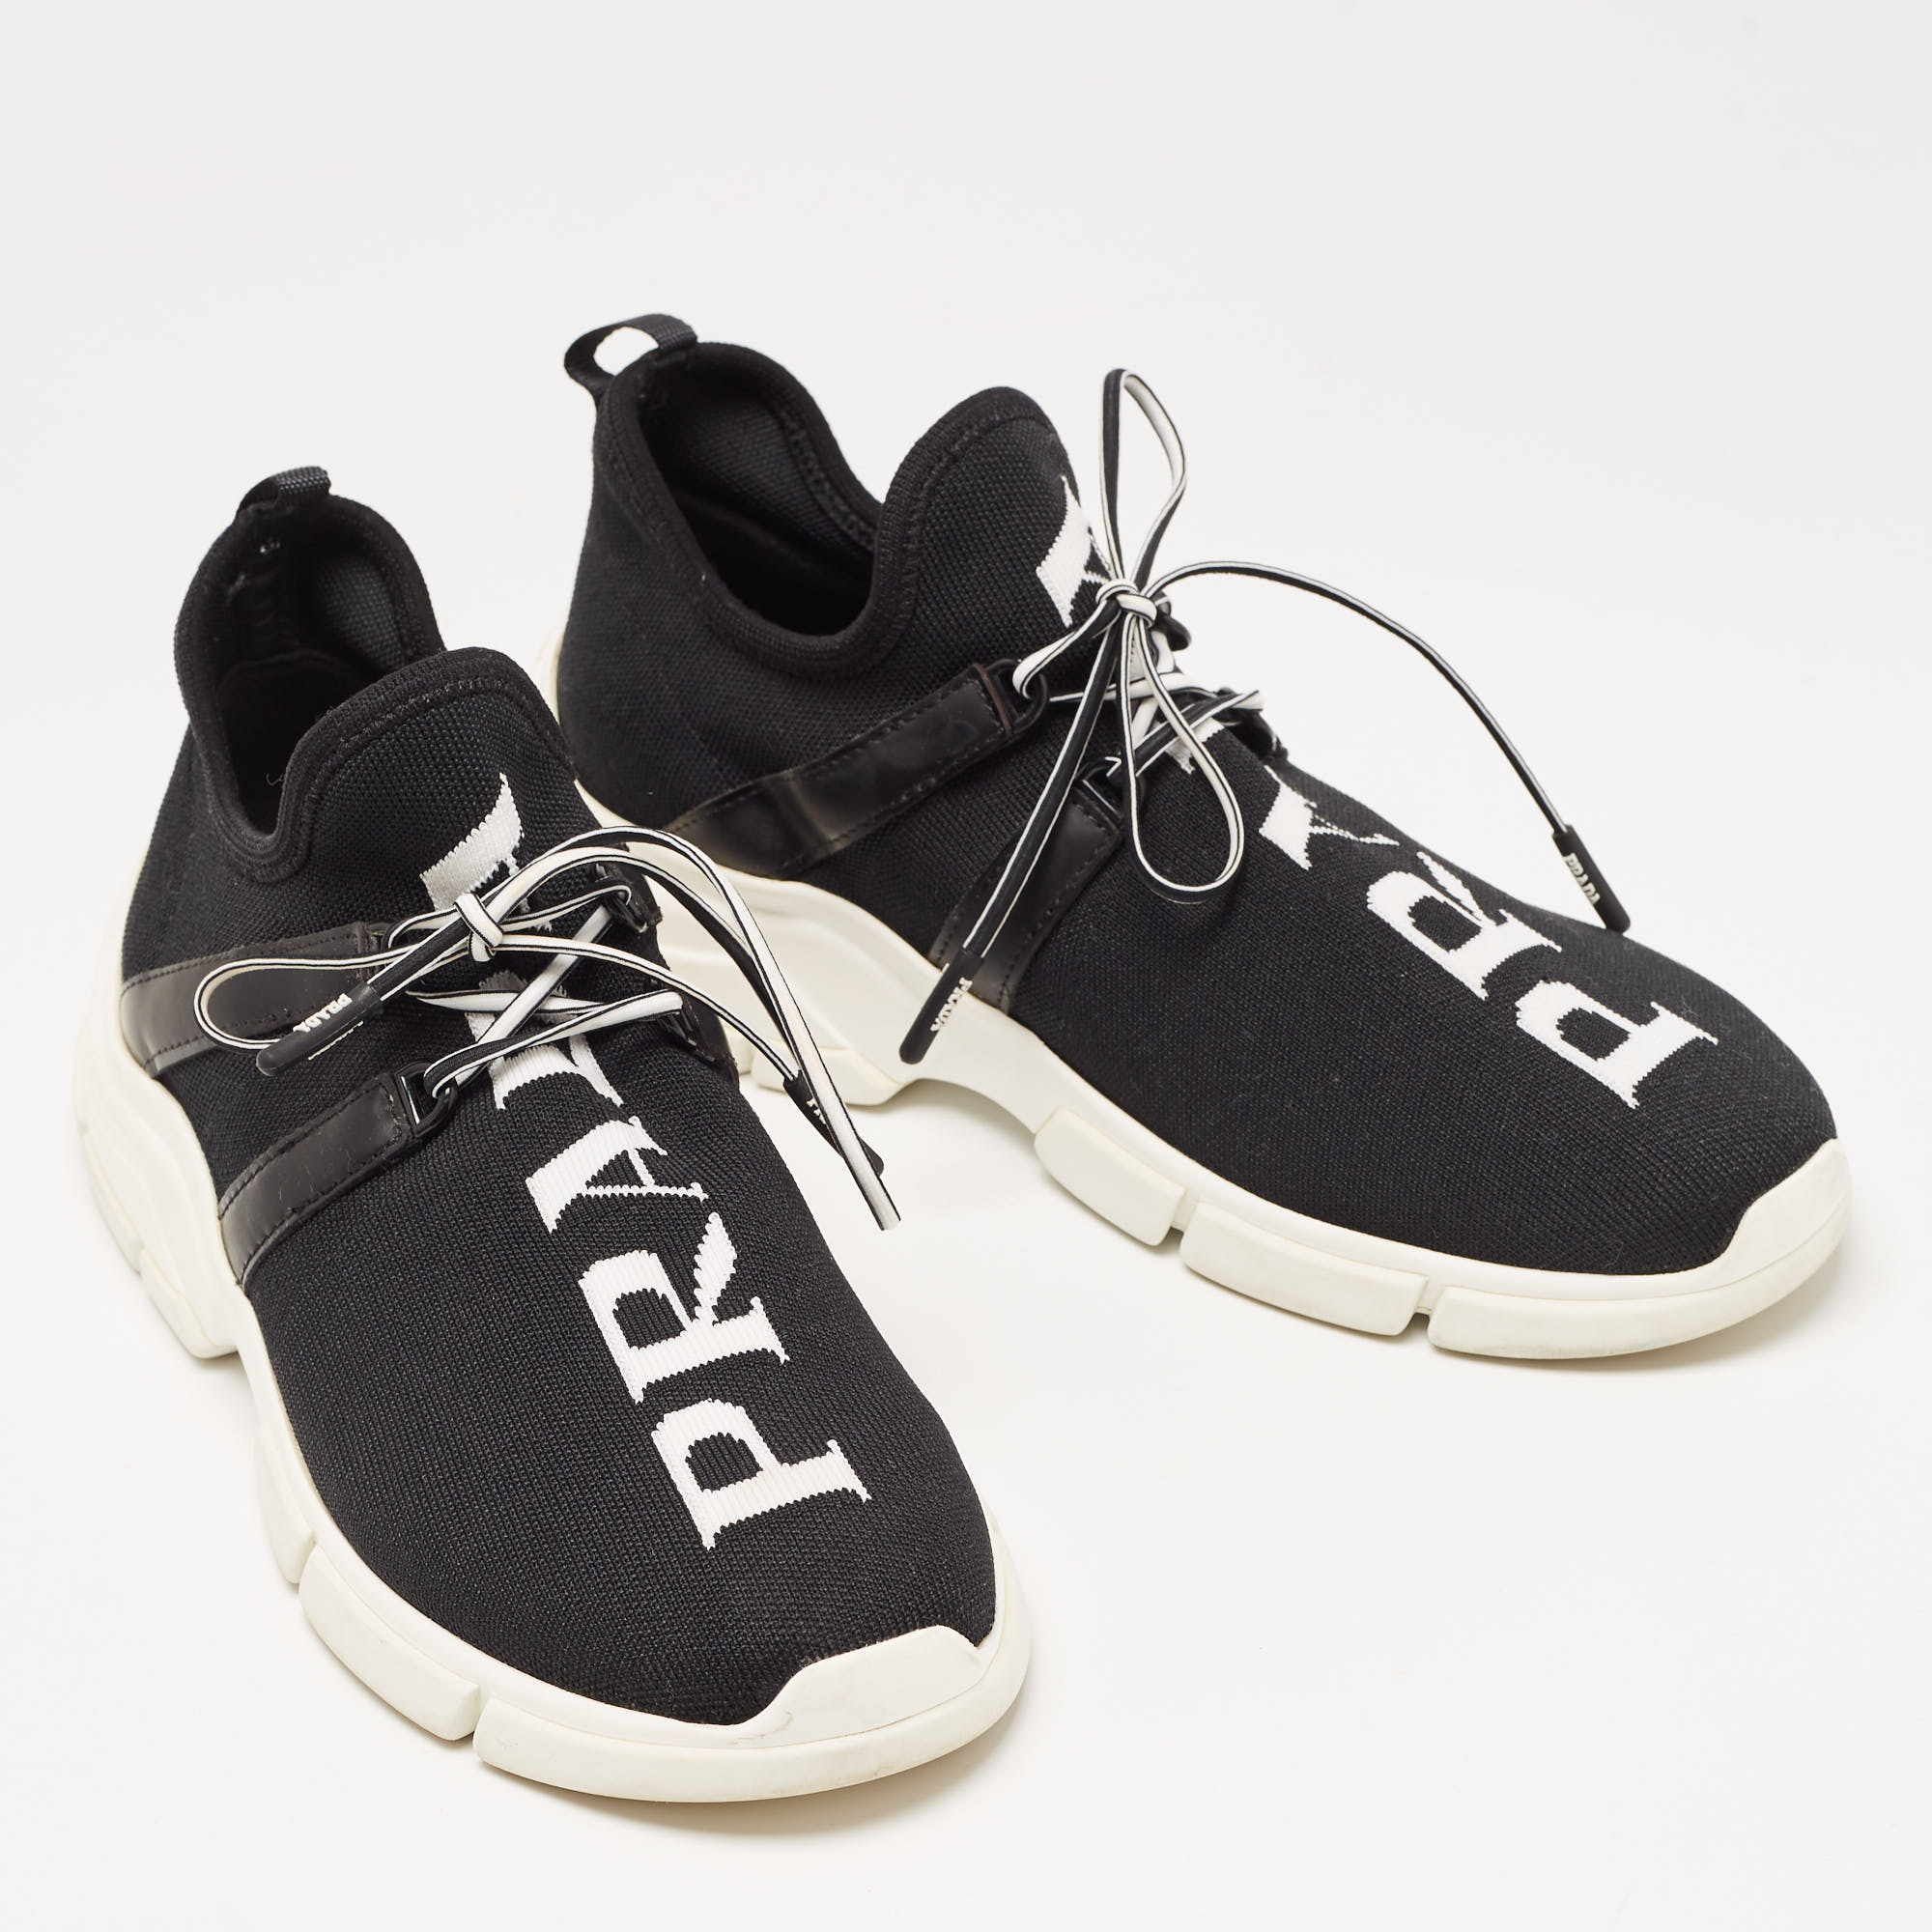 Prada Black Logo Knit Fabric Low Top Sneakers Size 38